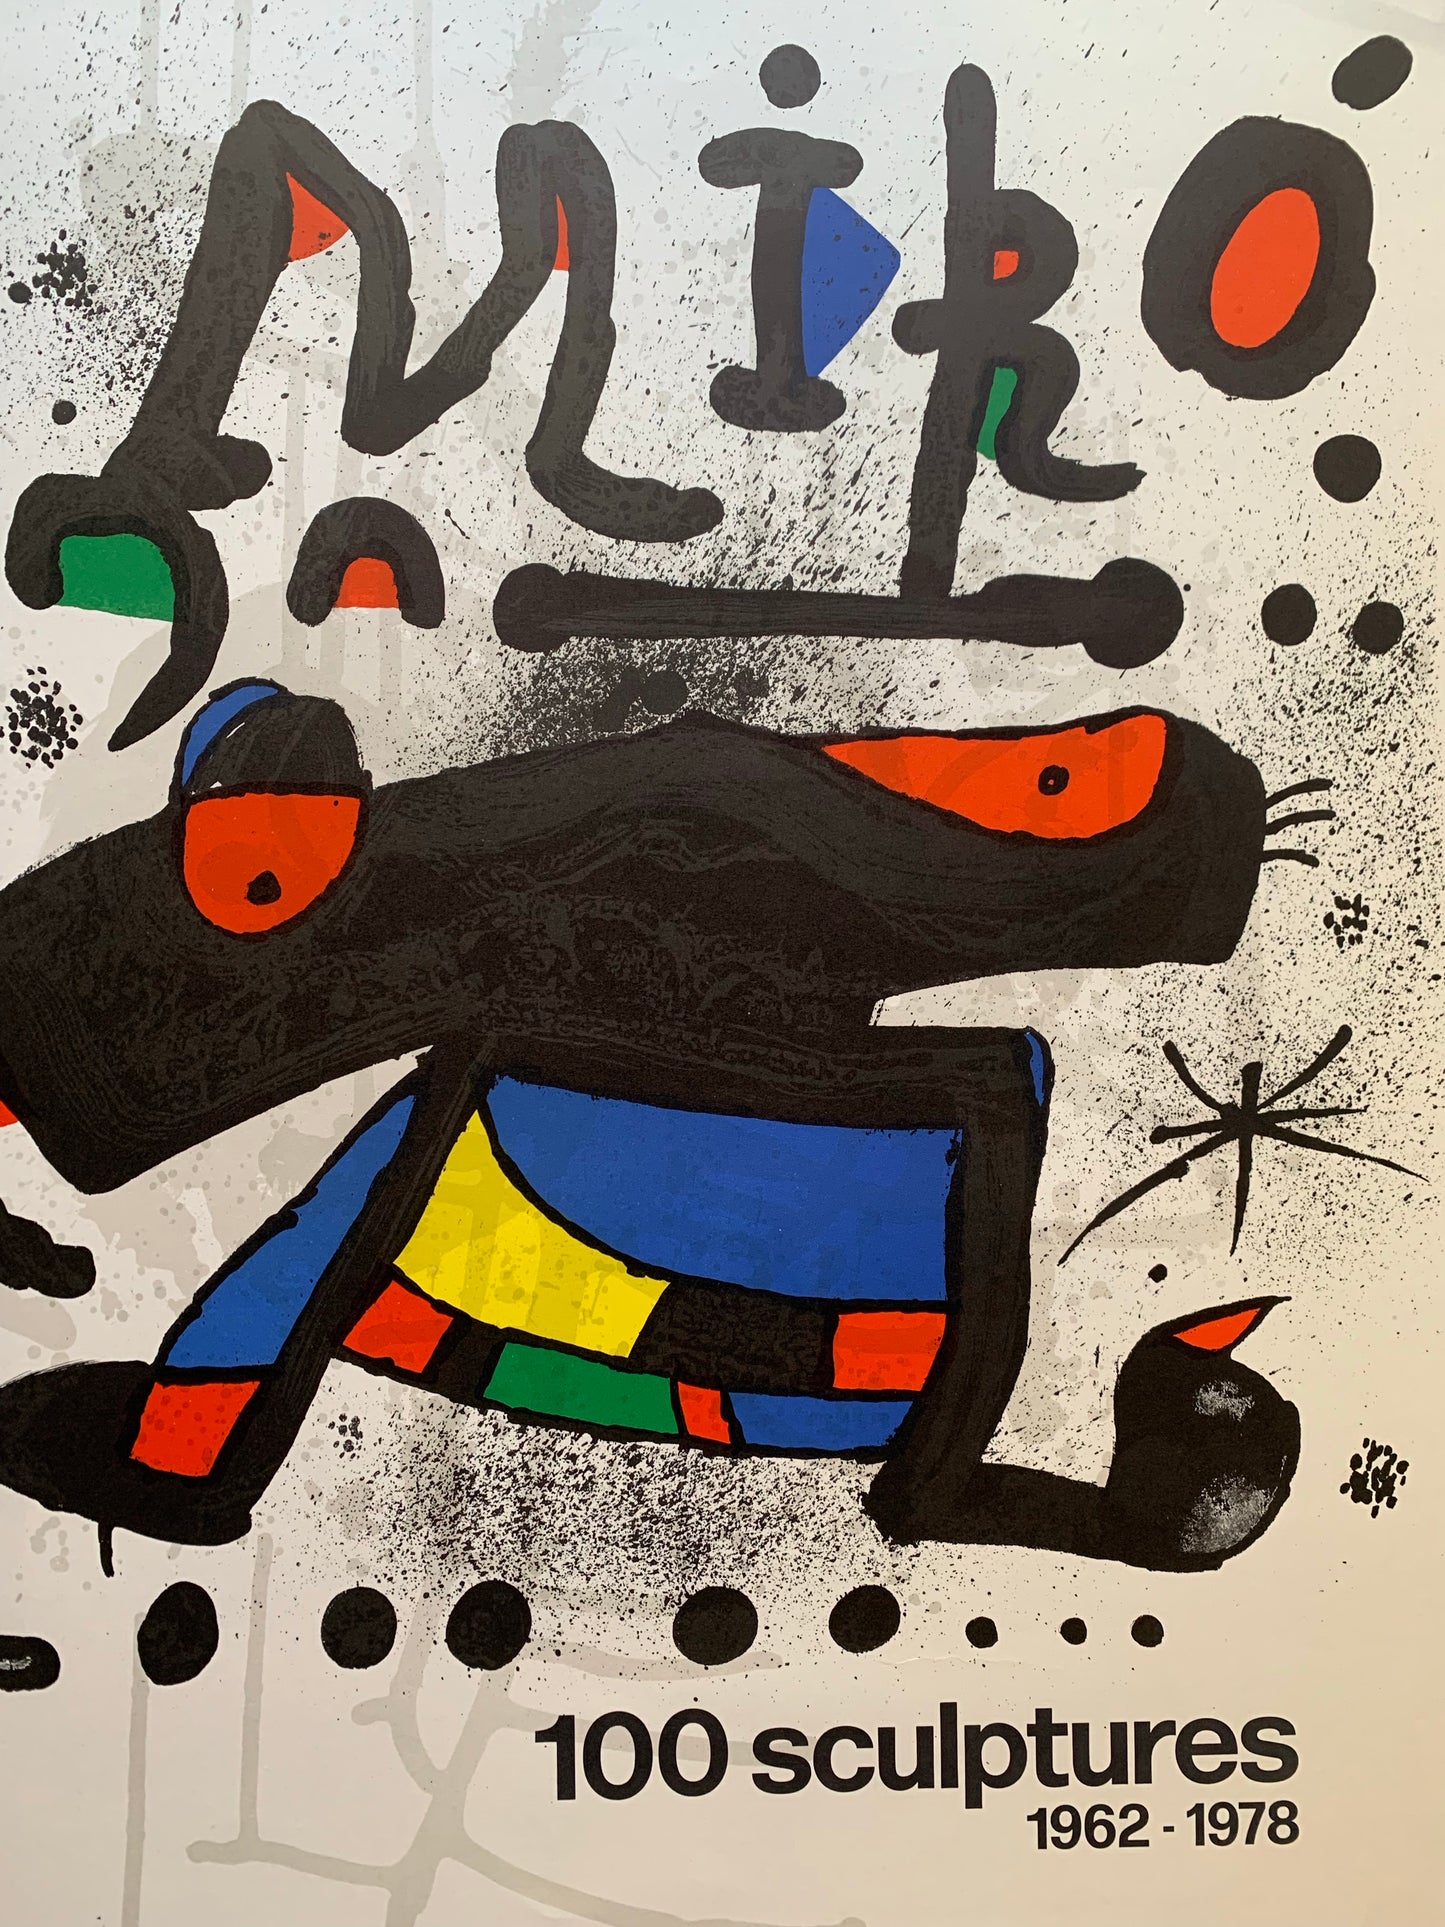 Joan Miró. "Miró, 100 sculptures", 1978